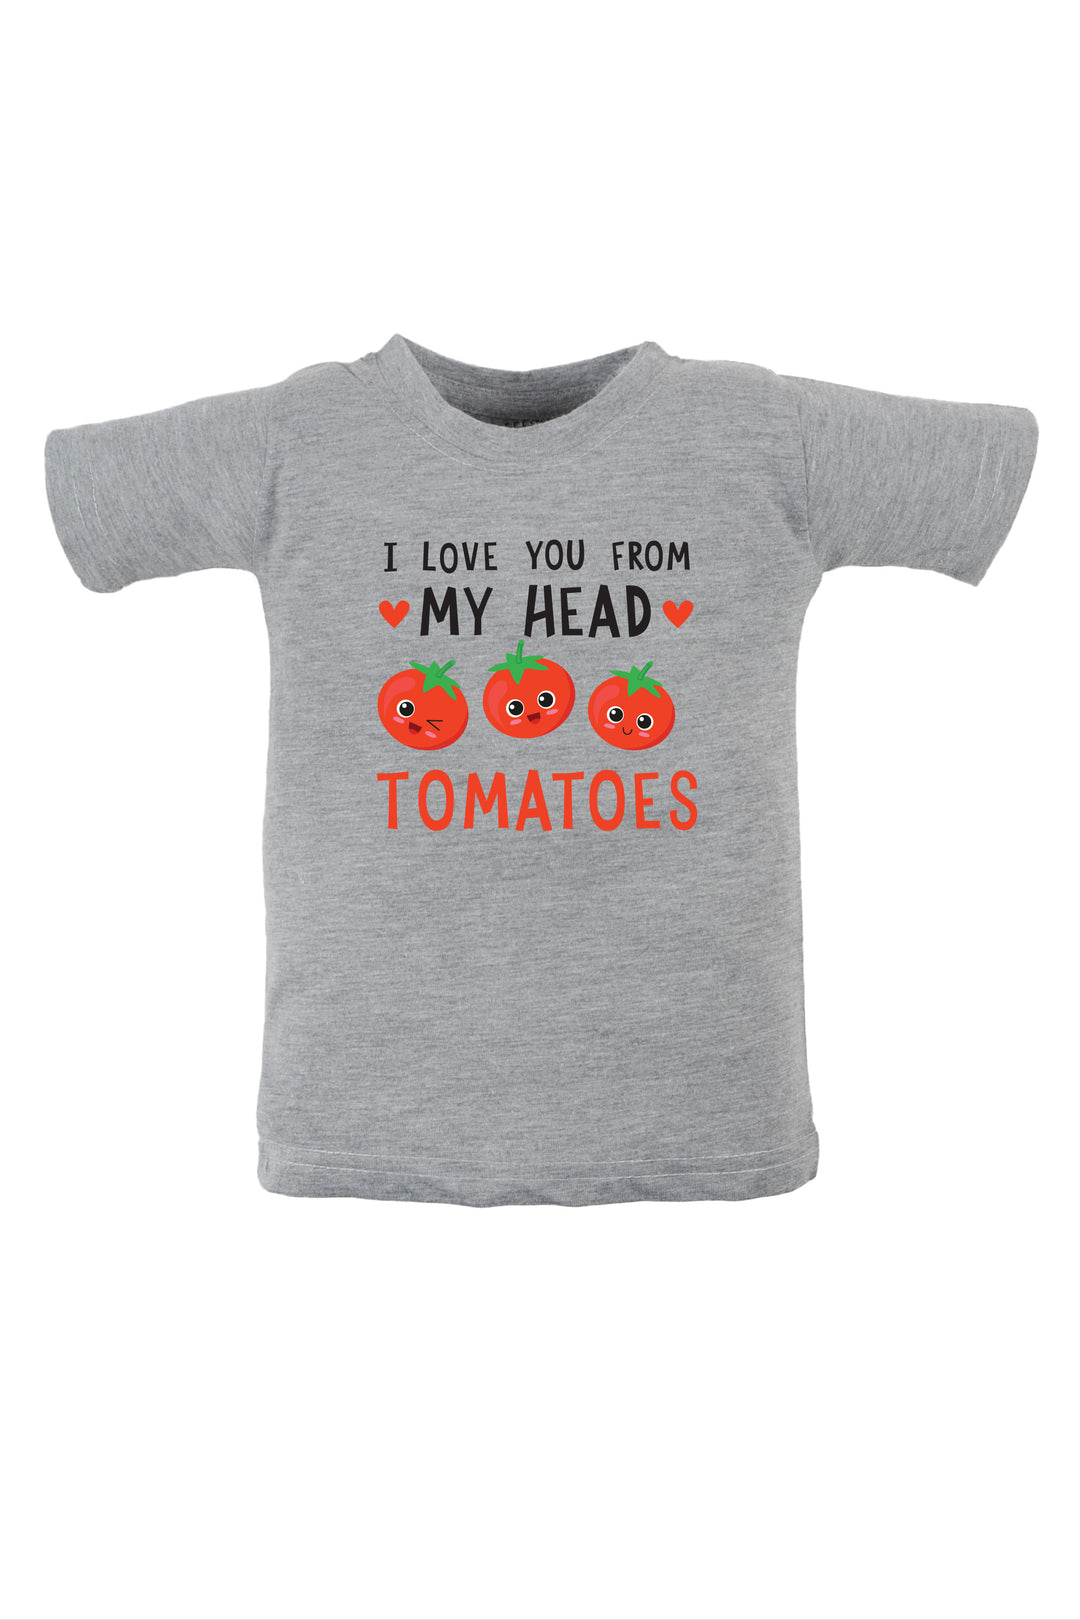 Tomatoes Kids T Shirt